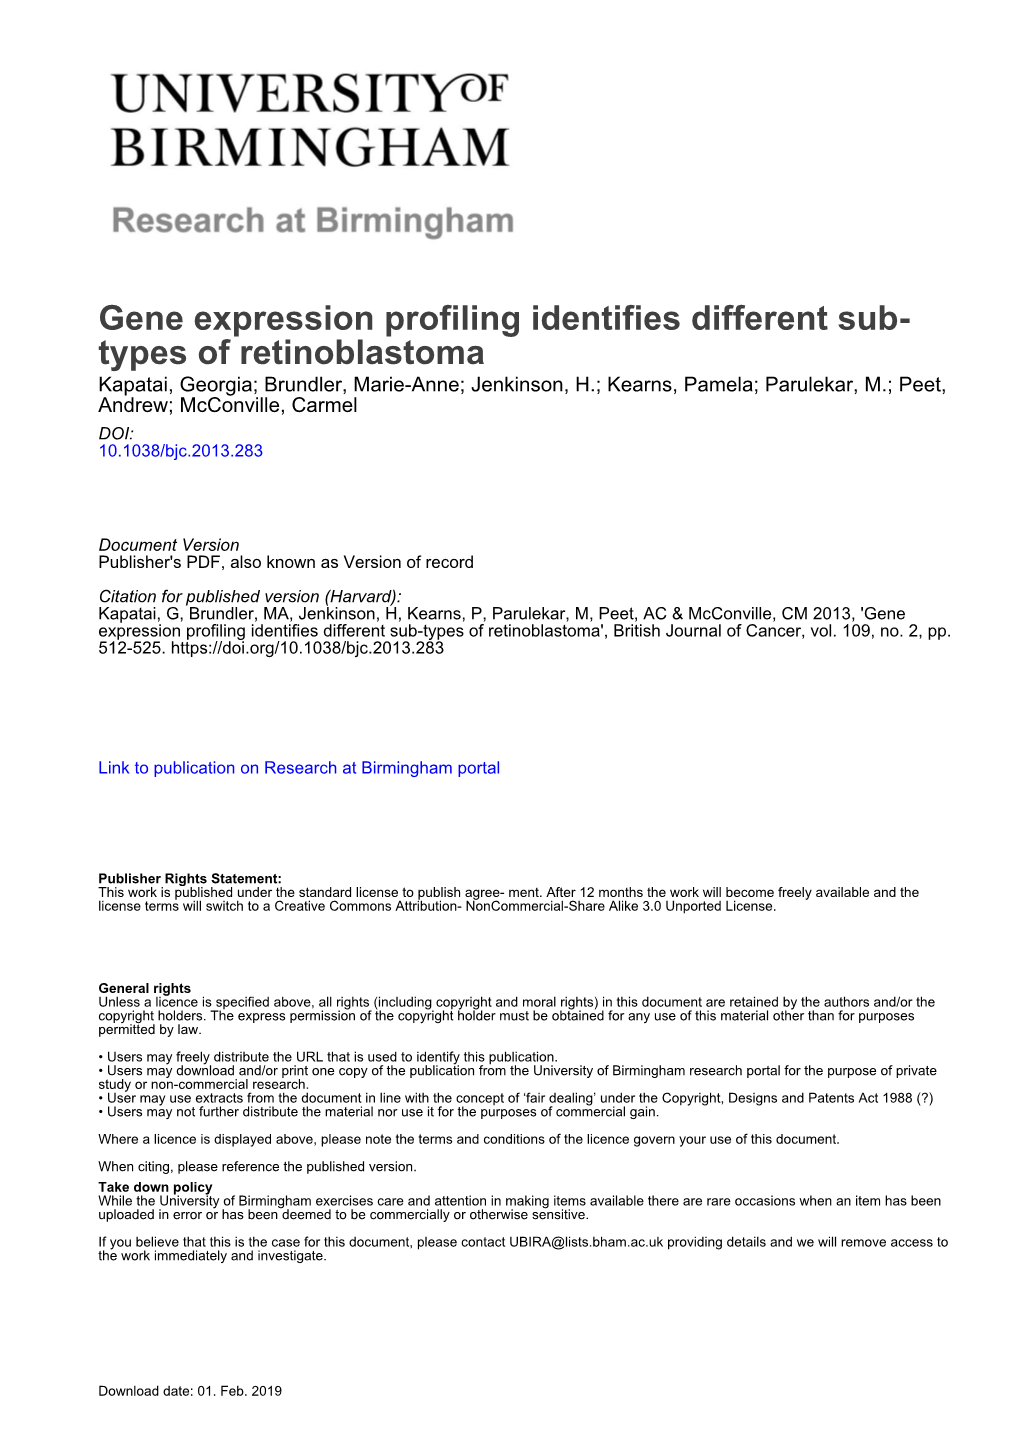 Gene Expression Profiling Identifies Different Sub-Types of Retinoblastoma', British Journal of Cancer, Vol